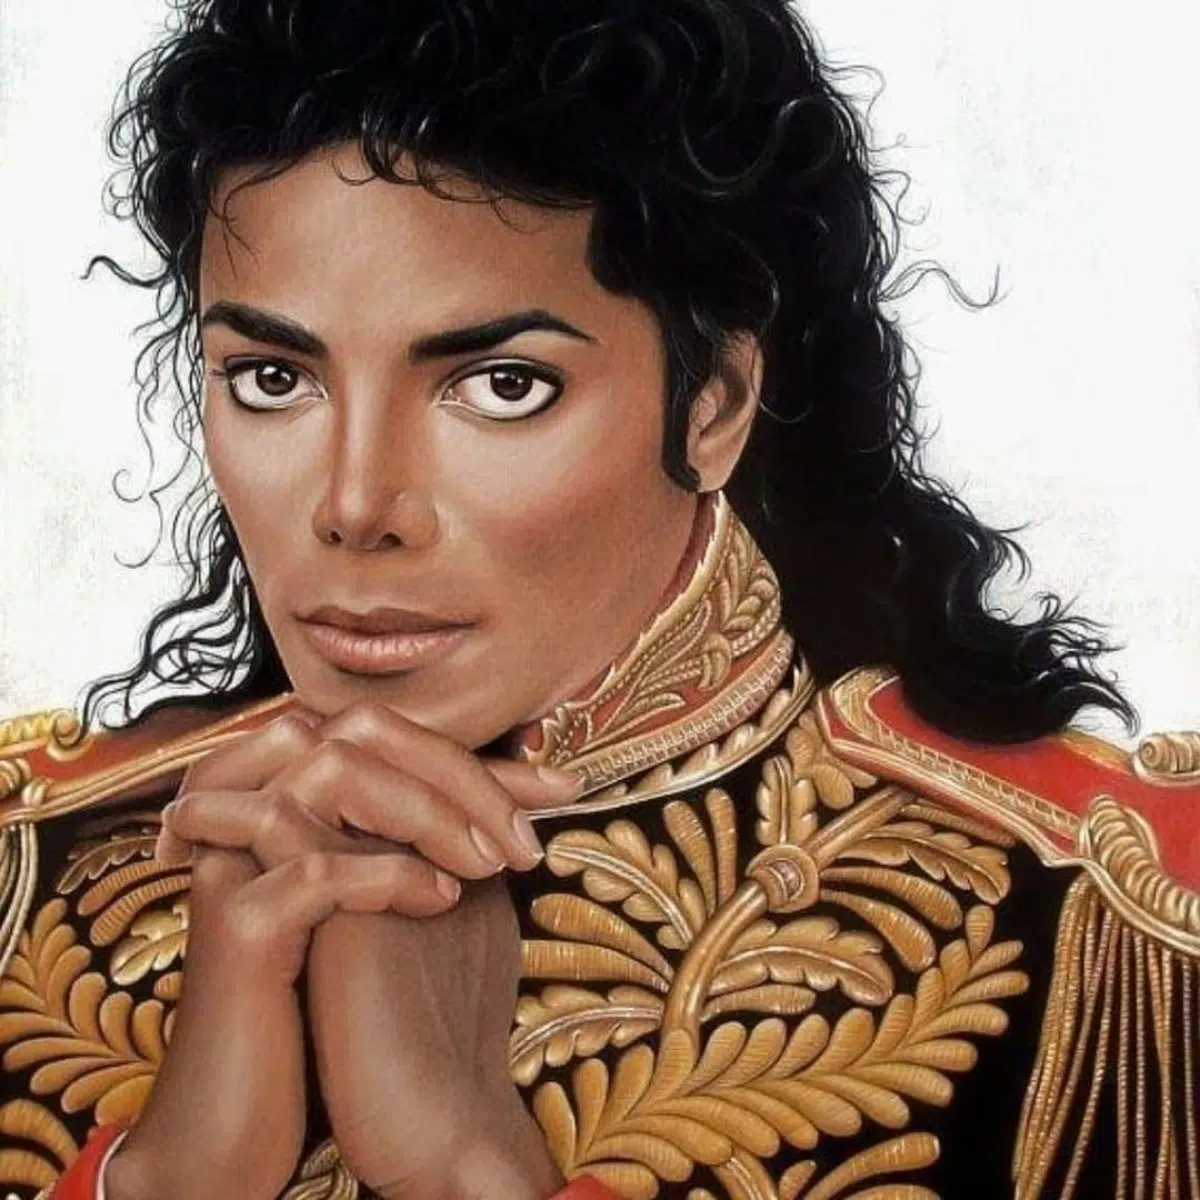 DOWNLOAD: Michael Jackson – “Thriller” Video + Audio Mp3